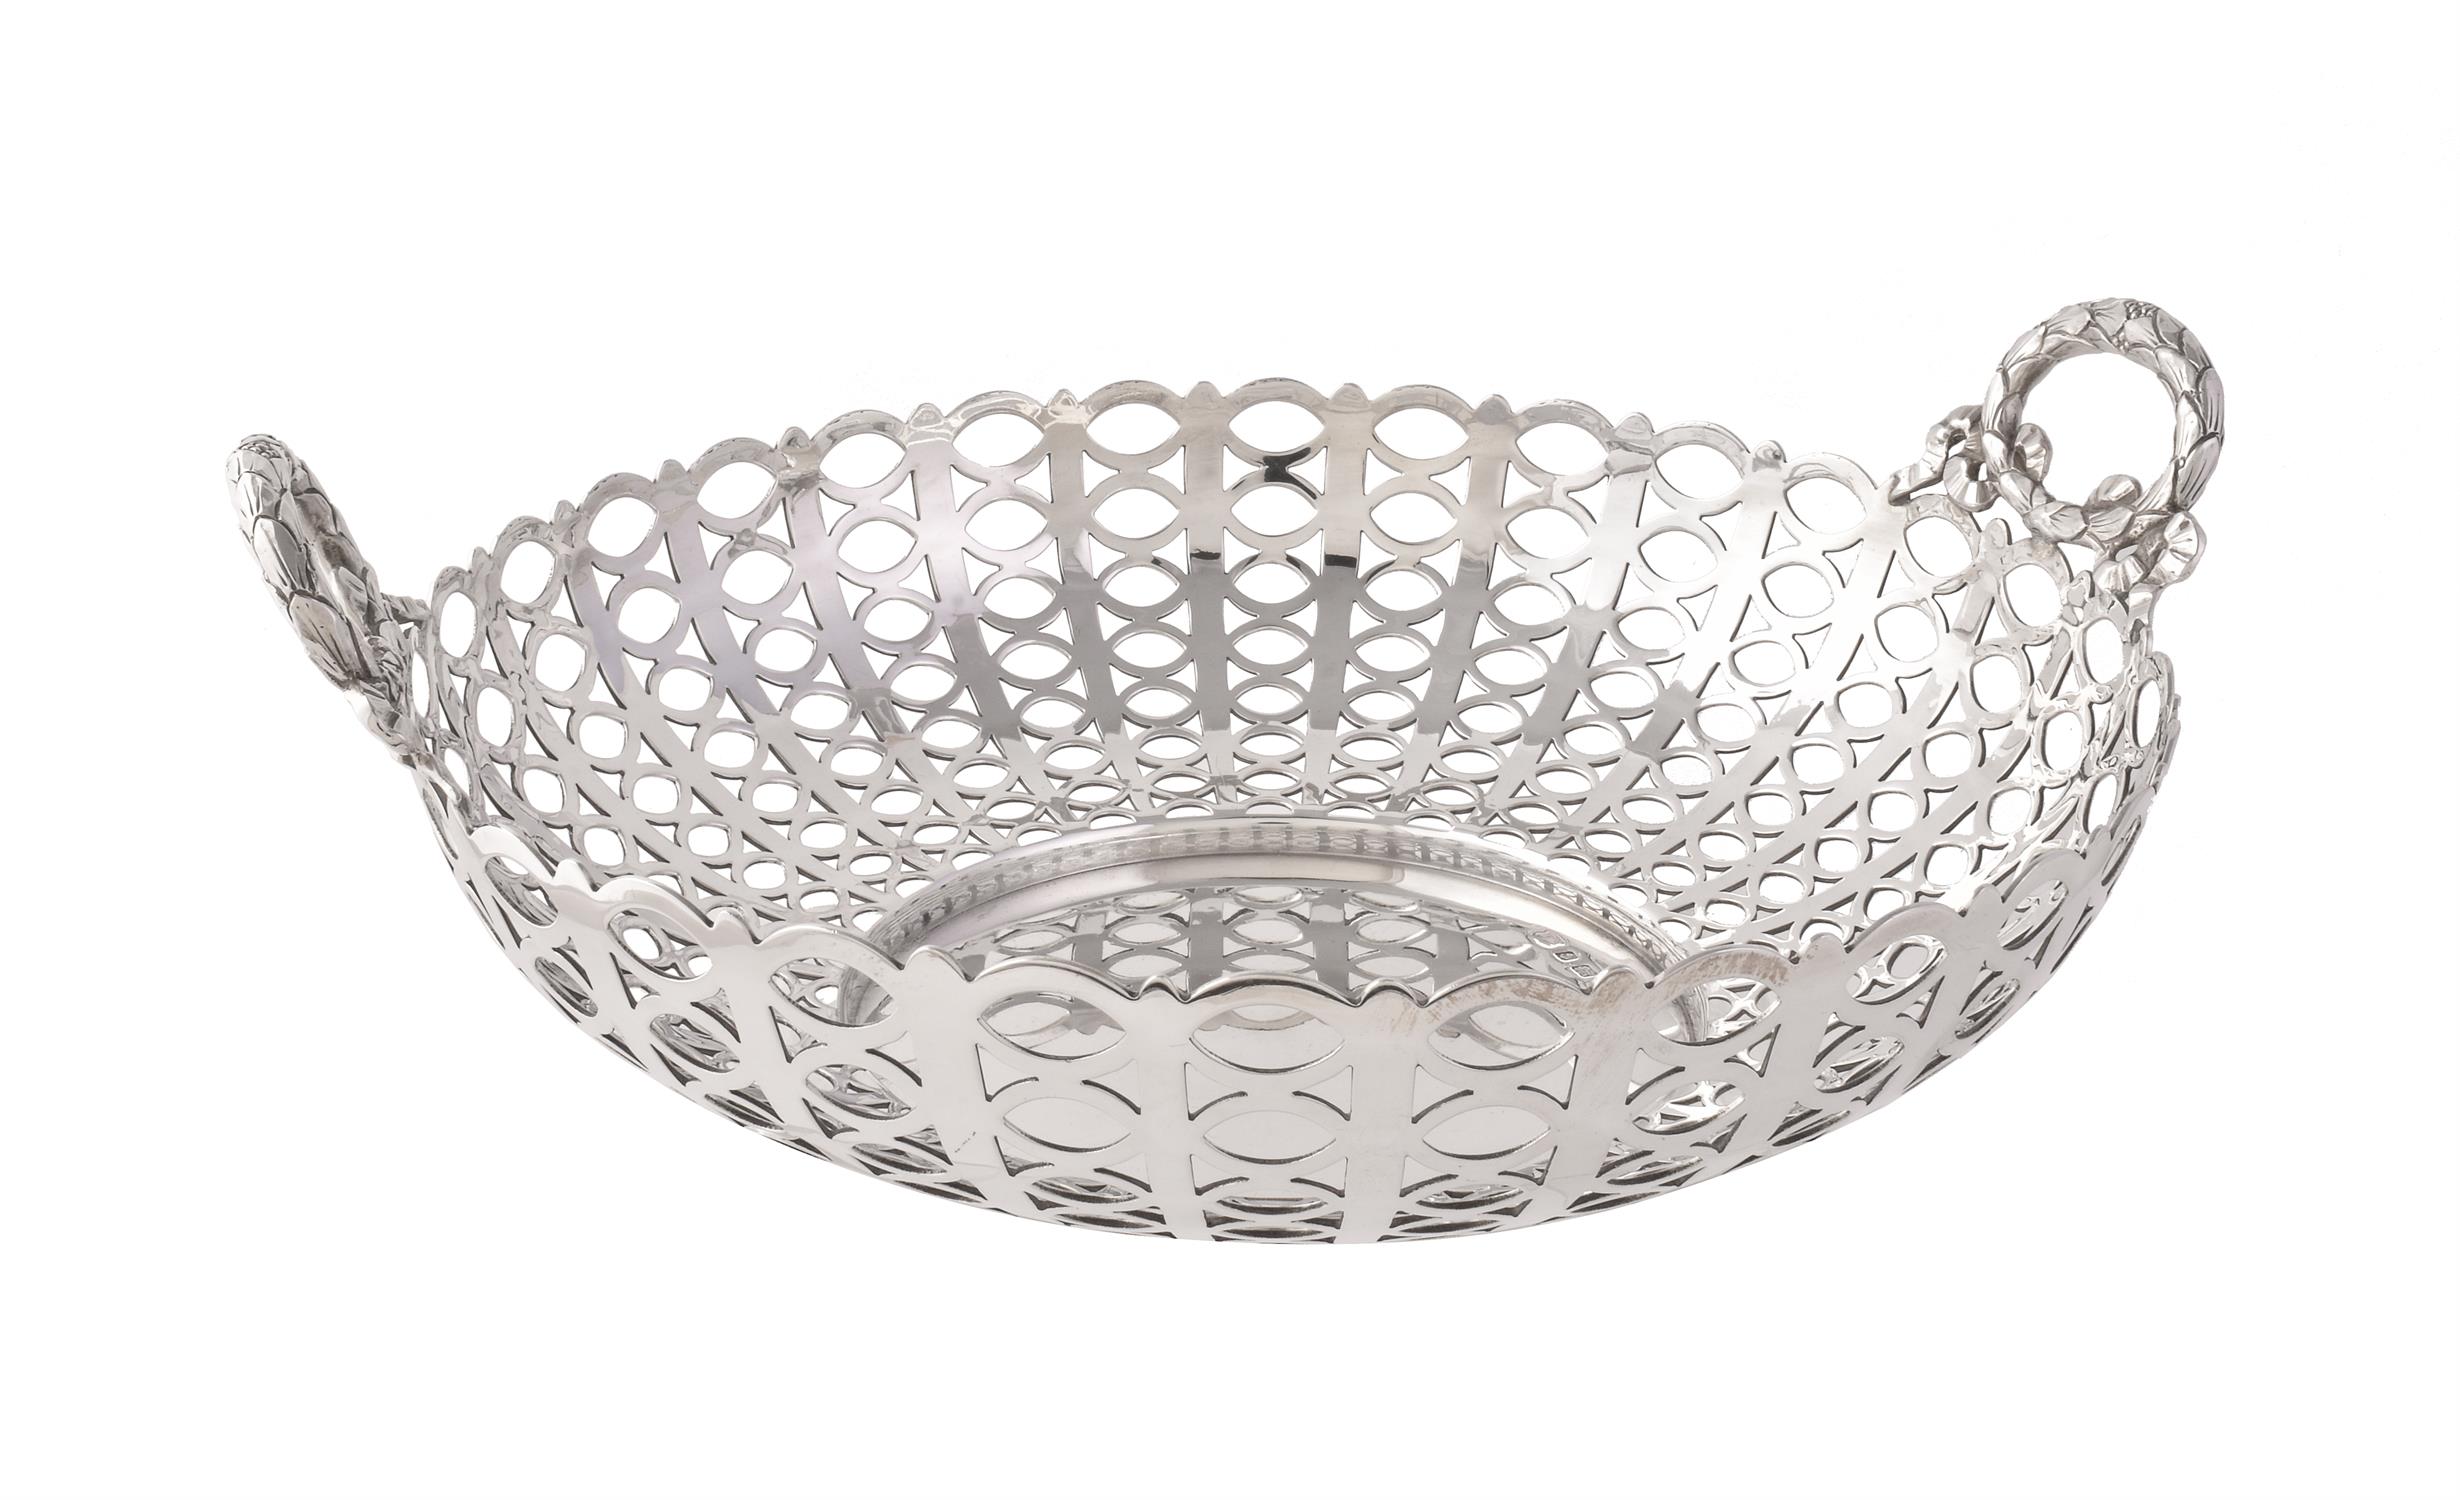 An Edwardian silver twin handled circular basket